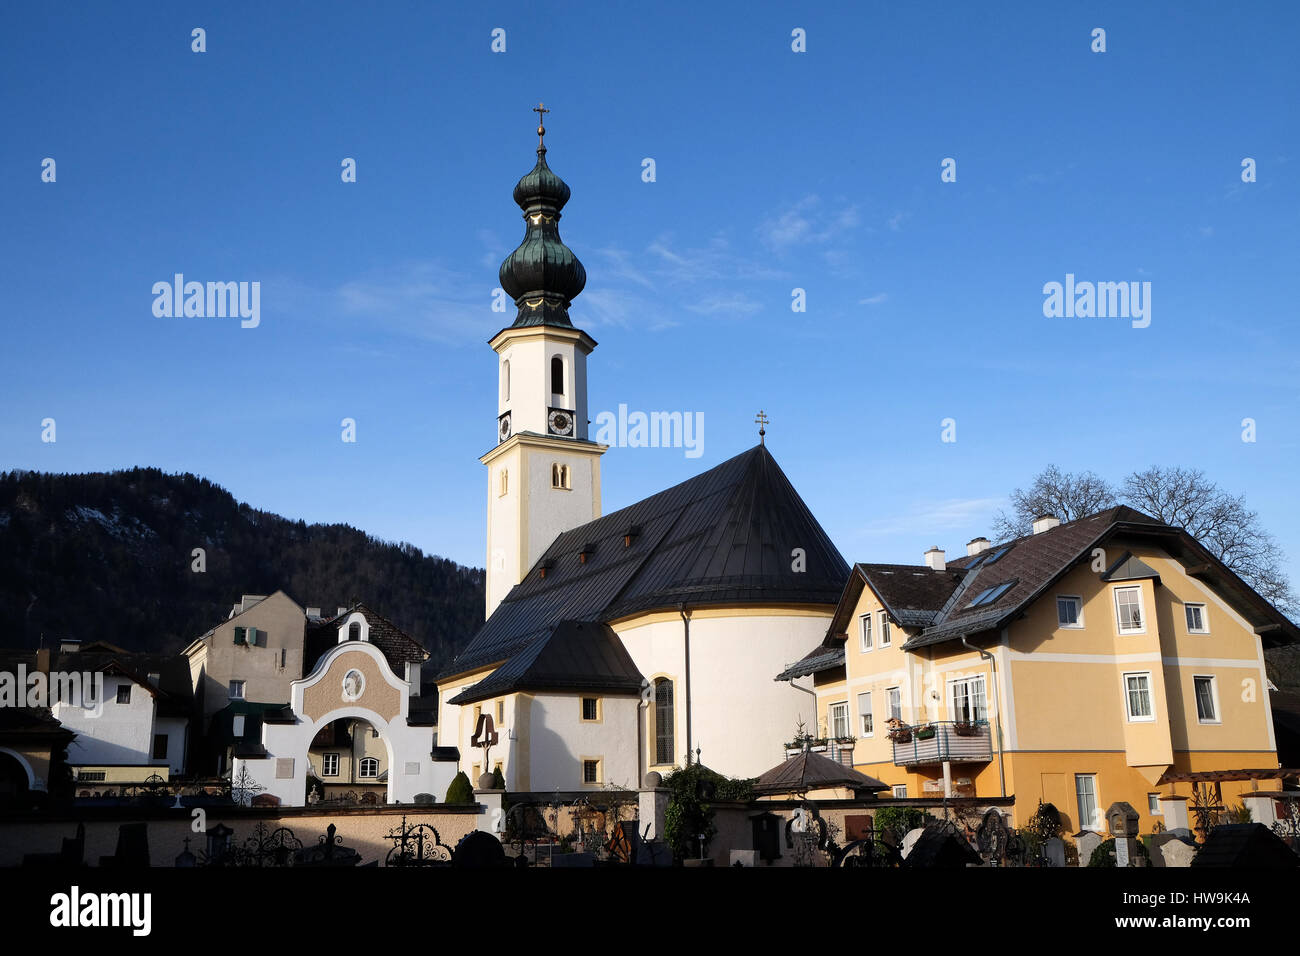 Parish Church in St. Gilgen on Wolfgang See lake, Austria on December 14, 2014. Stock Photo